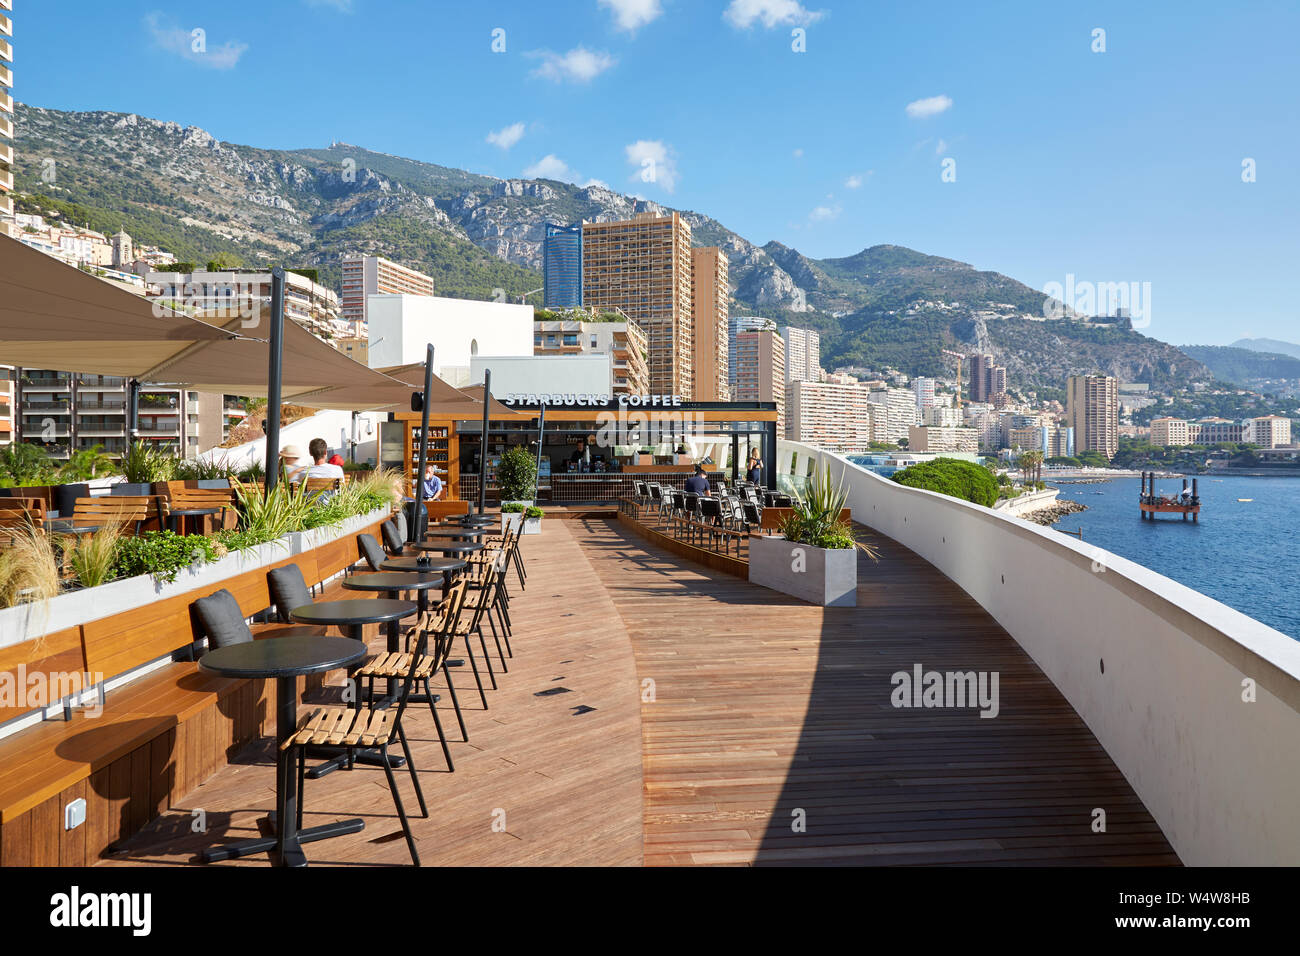 MONTE CARLO, MONACO - AUGUST 21, 2016: Starbucks Coffee cafe terrace in a sunny summer day with sea and city view in Monte Carlo, Monaco. Stock Photo